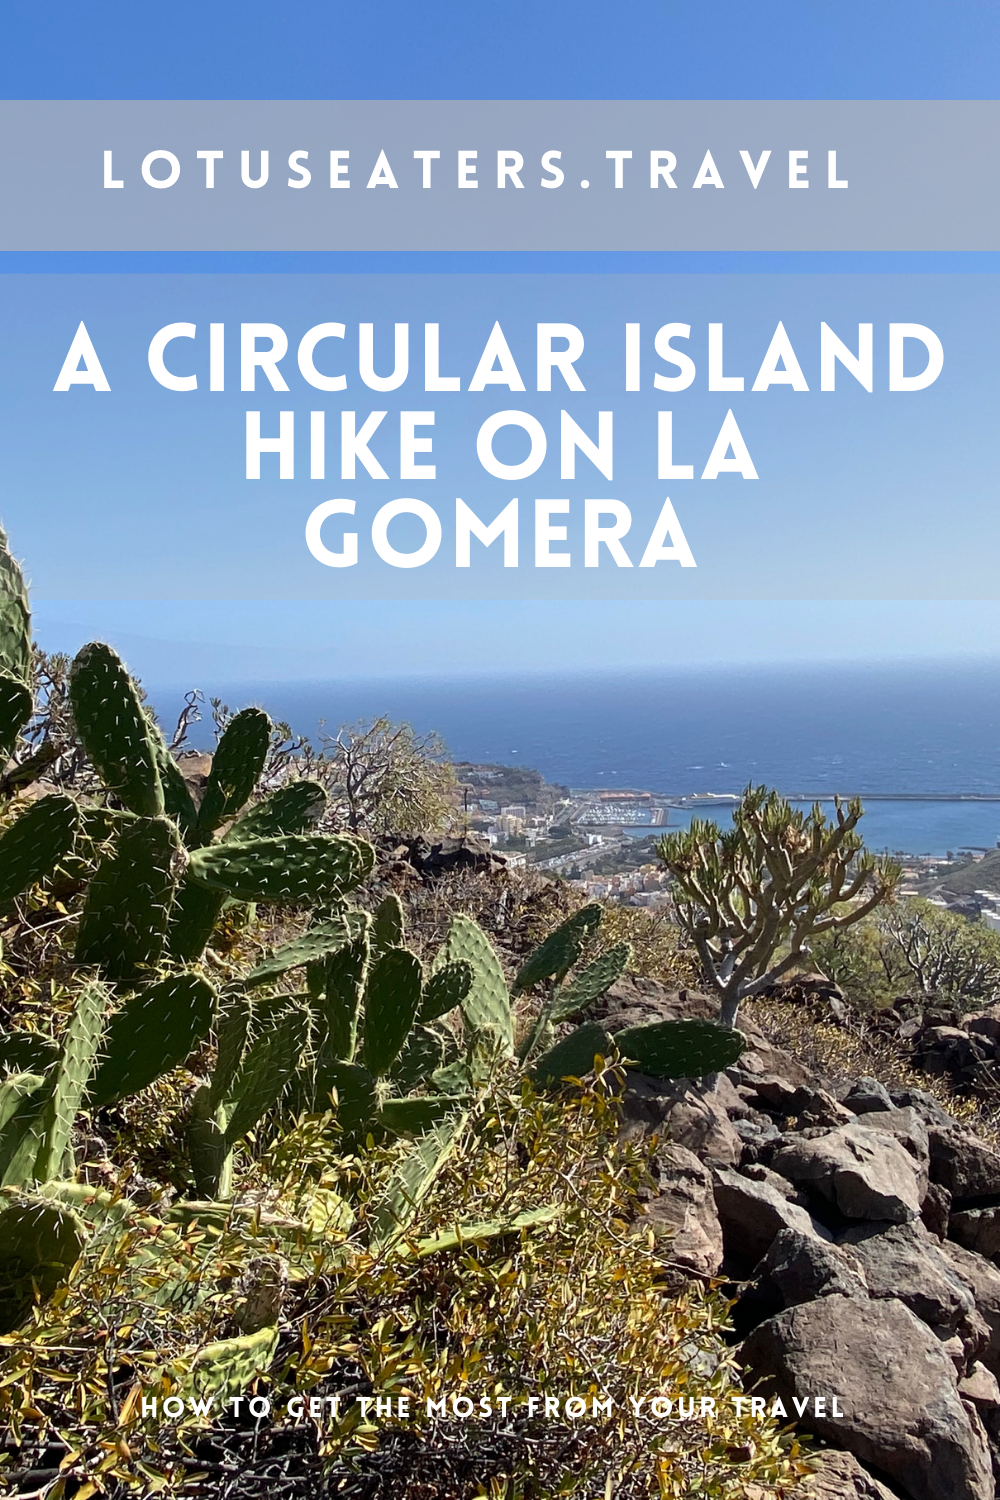 Combine the GR131 and GR132 La Gomera to make a circular island hike